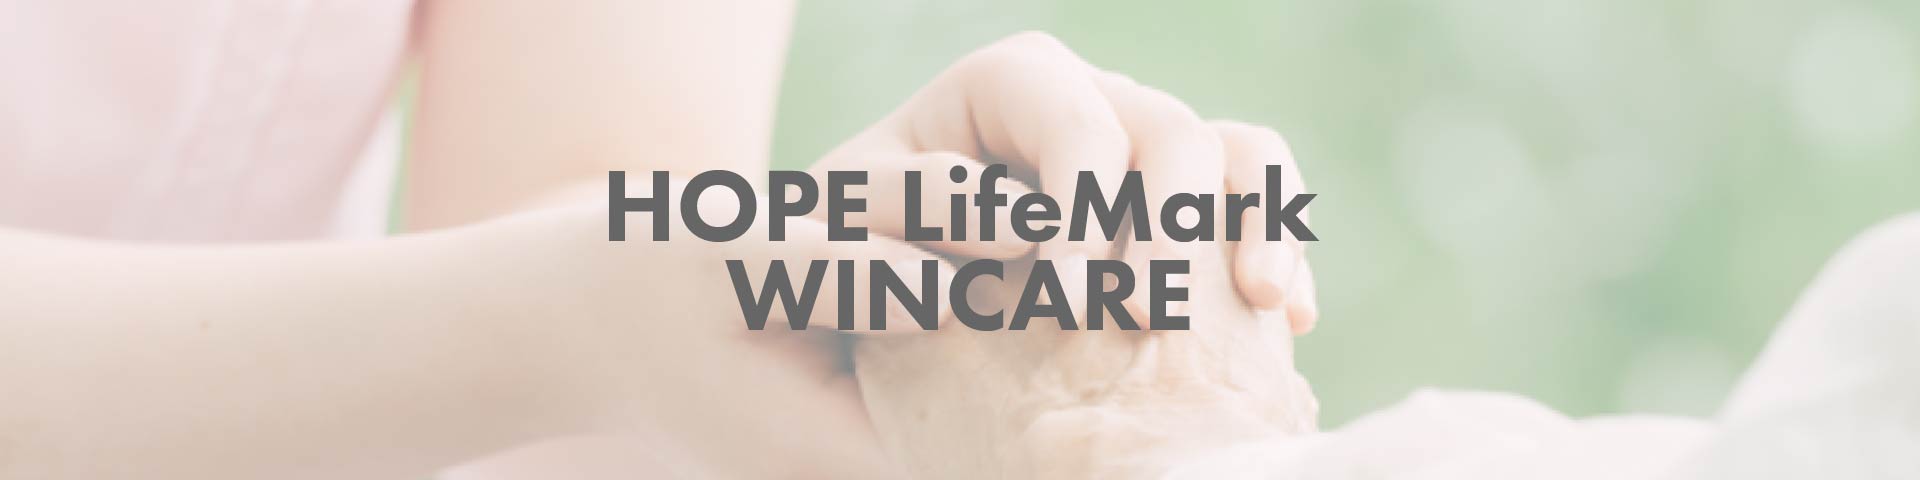 HOPE LifeMark-WINCARE